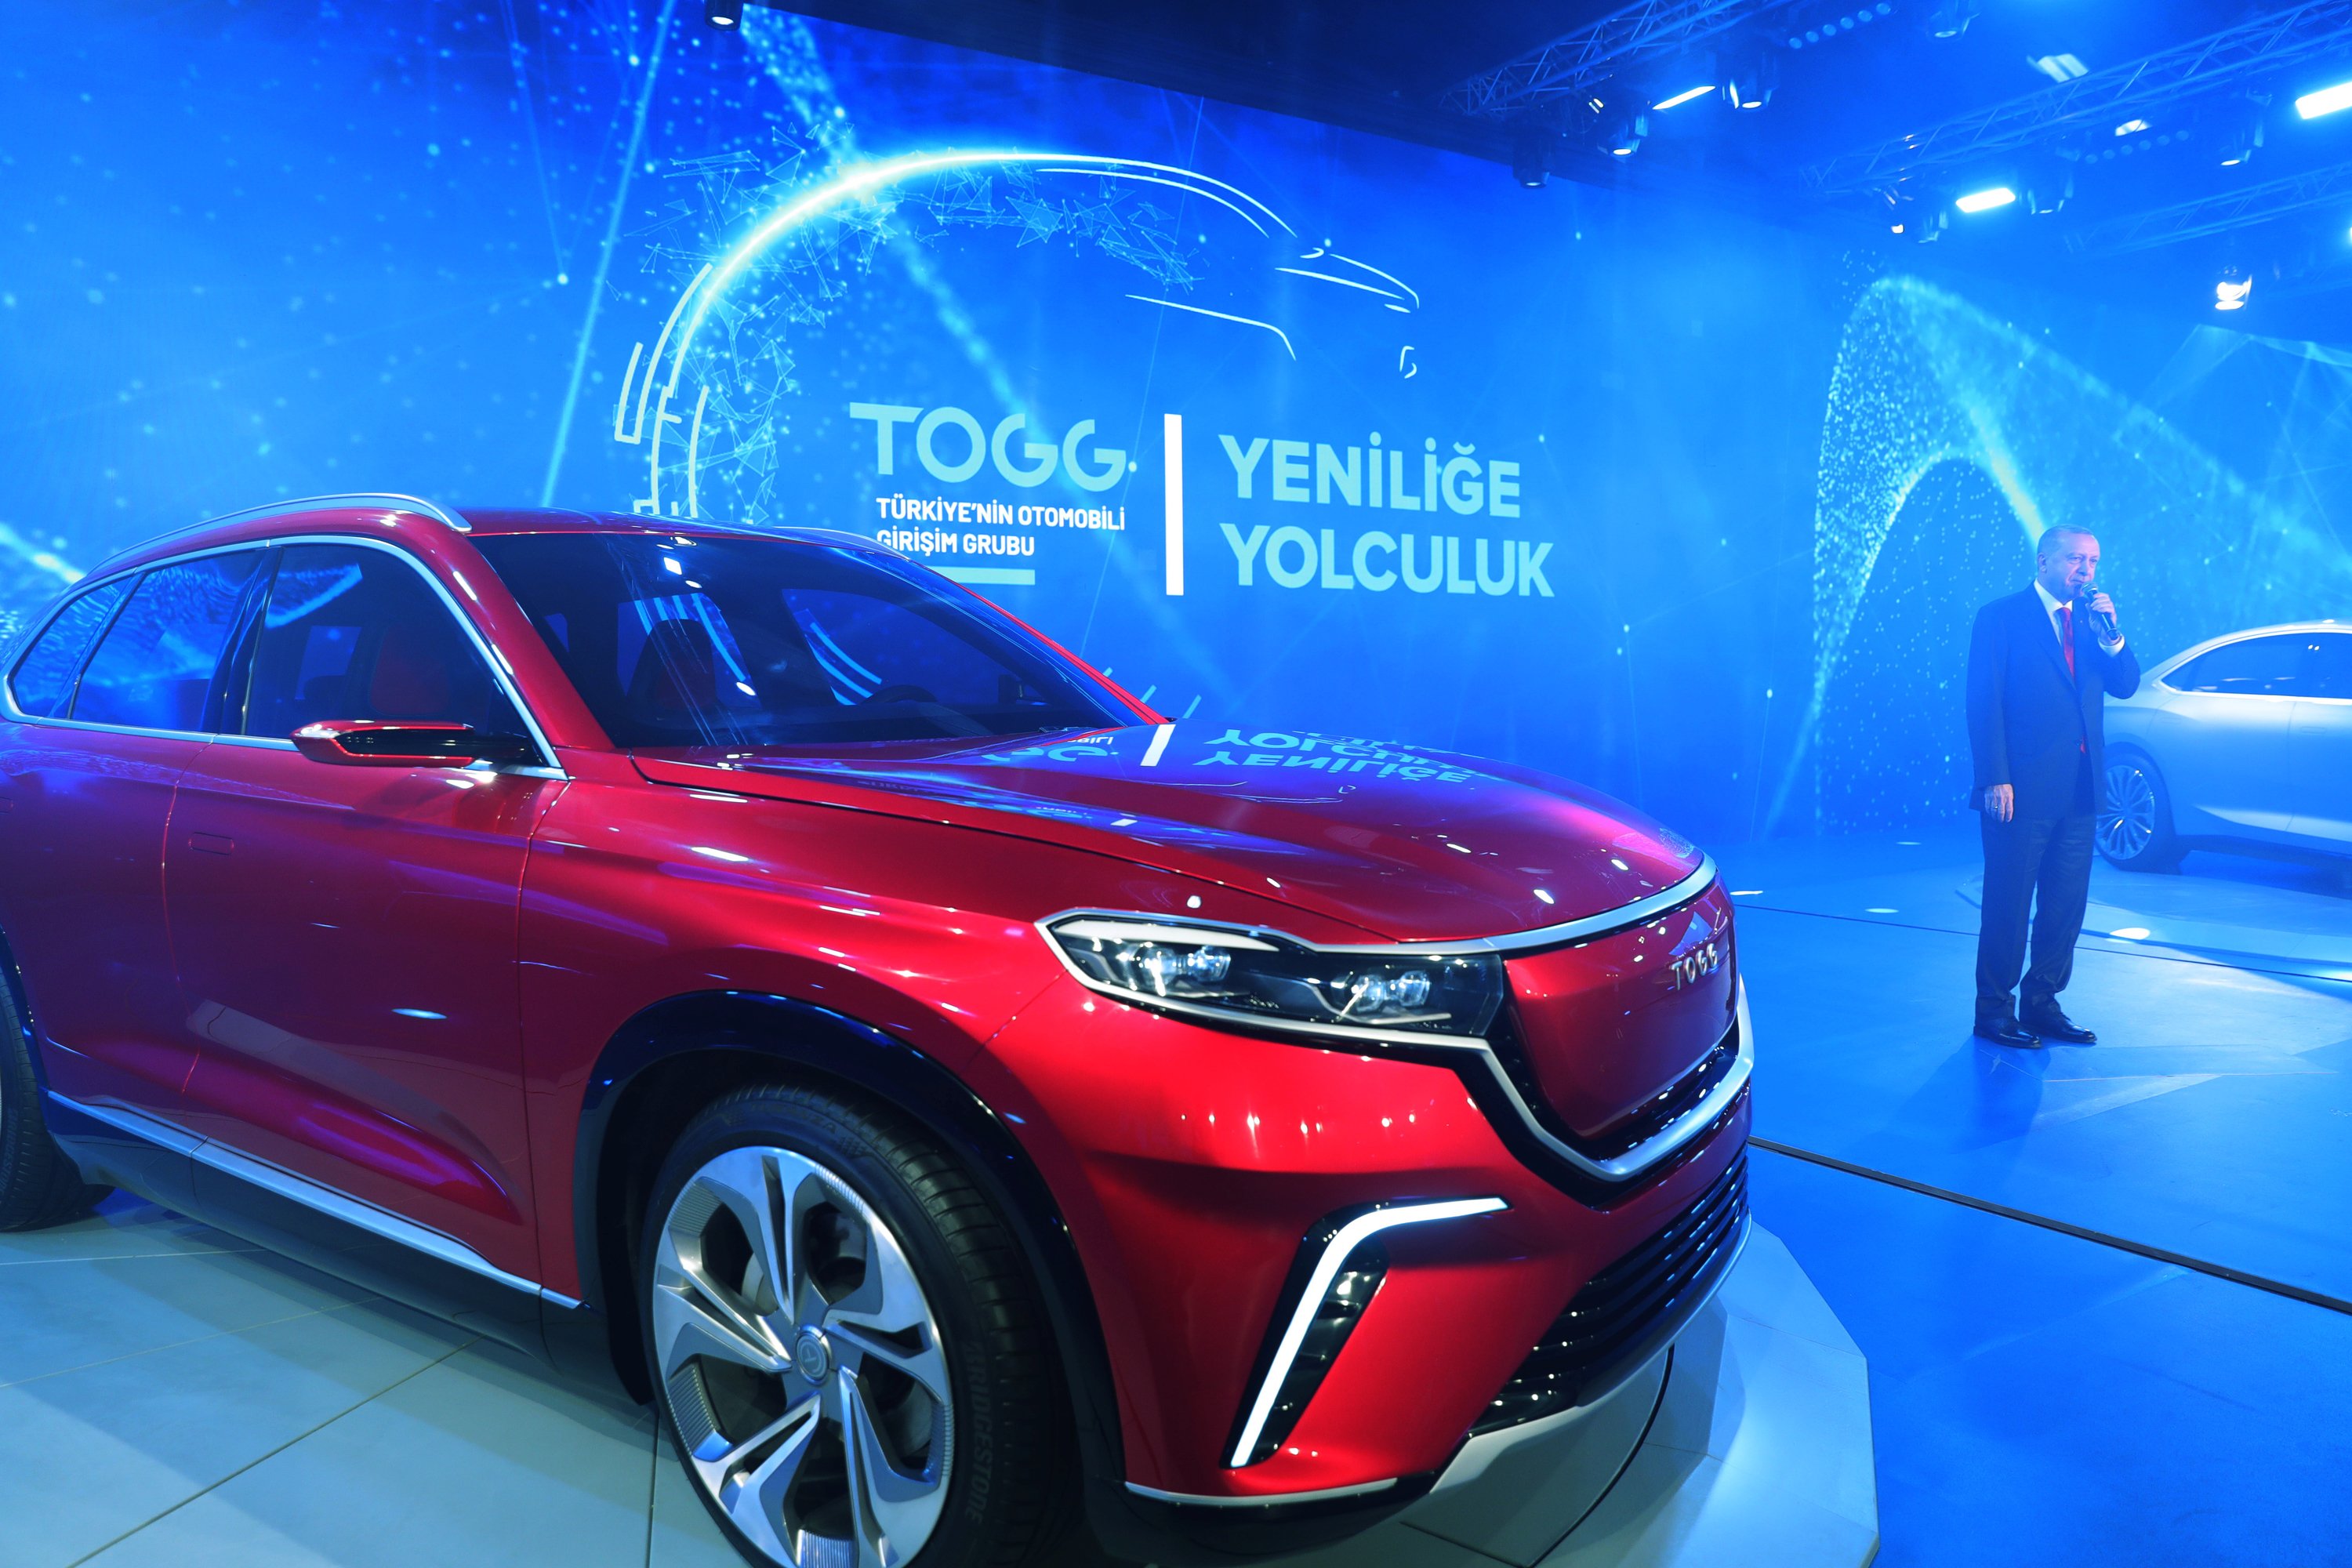 Turkey presents prototypes in $3.7 billion car project | Automotive News Europe